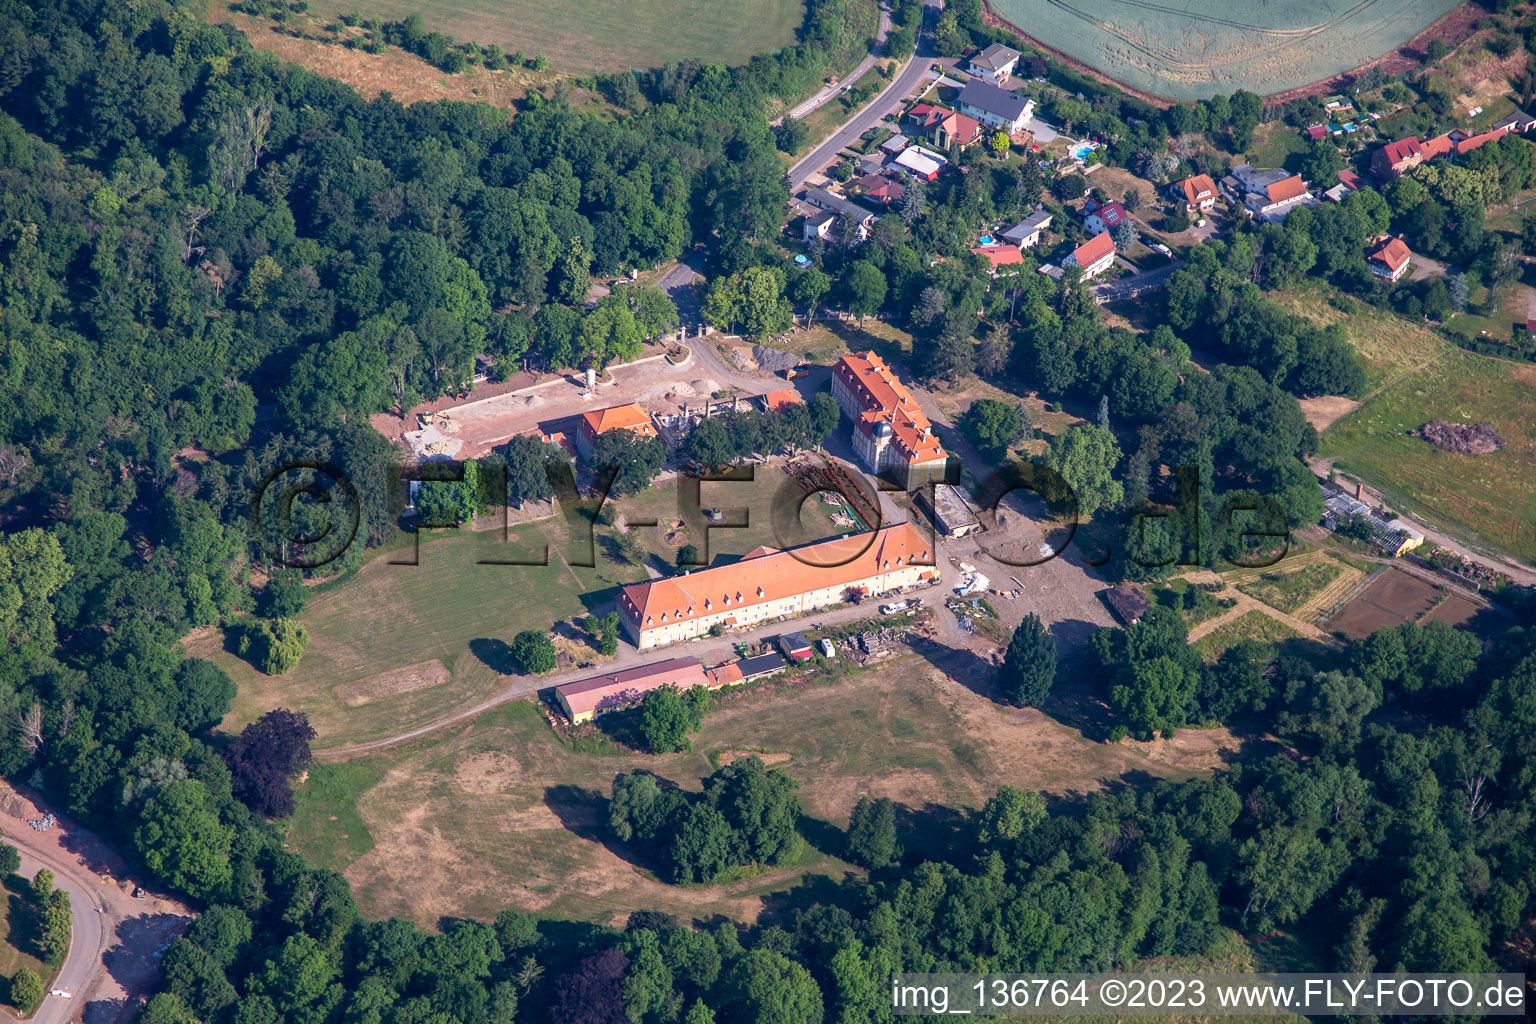 Aerial view of Bernstein Castle Meisdorf and Waldhotel Forsthaus GmbH in the district Meisdorf in Falkenstein in the state Saxony-Anhalt, Germany